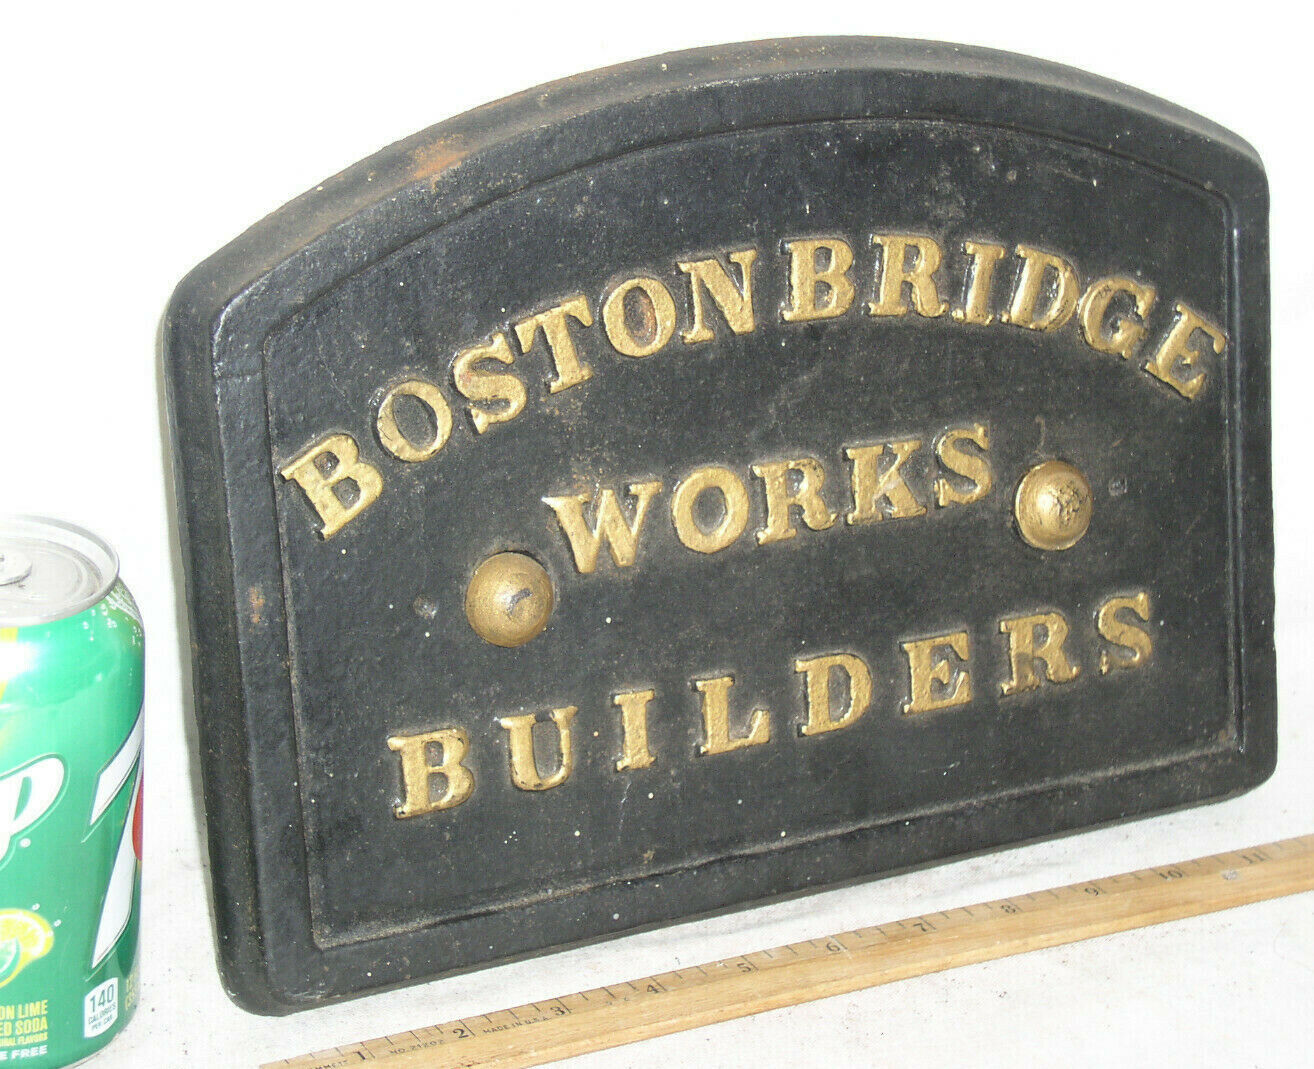 BOSTON BRIDGE WORKS BUILDERS B & A BOSTON ALBANY RAILROAD RAIL LINE PLAQUE PLATE